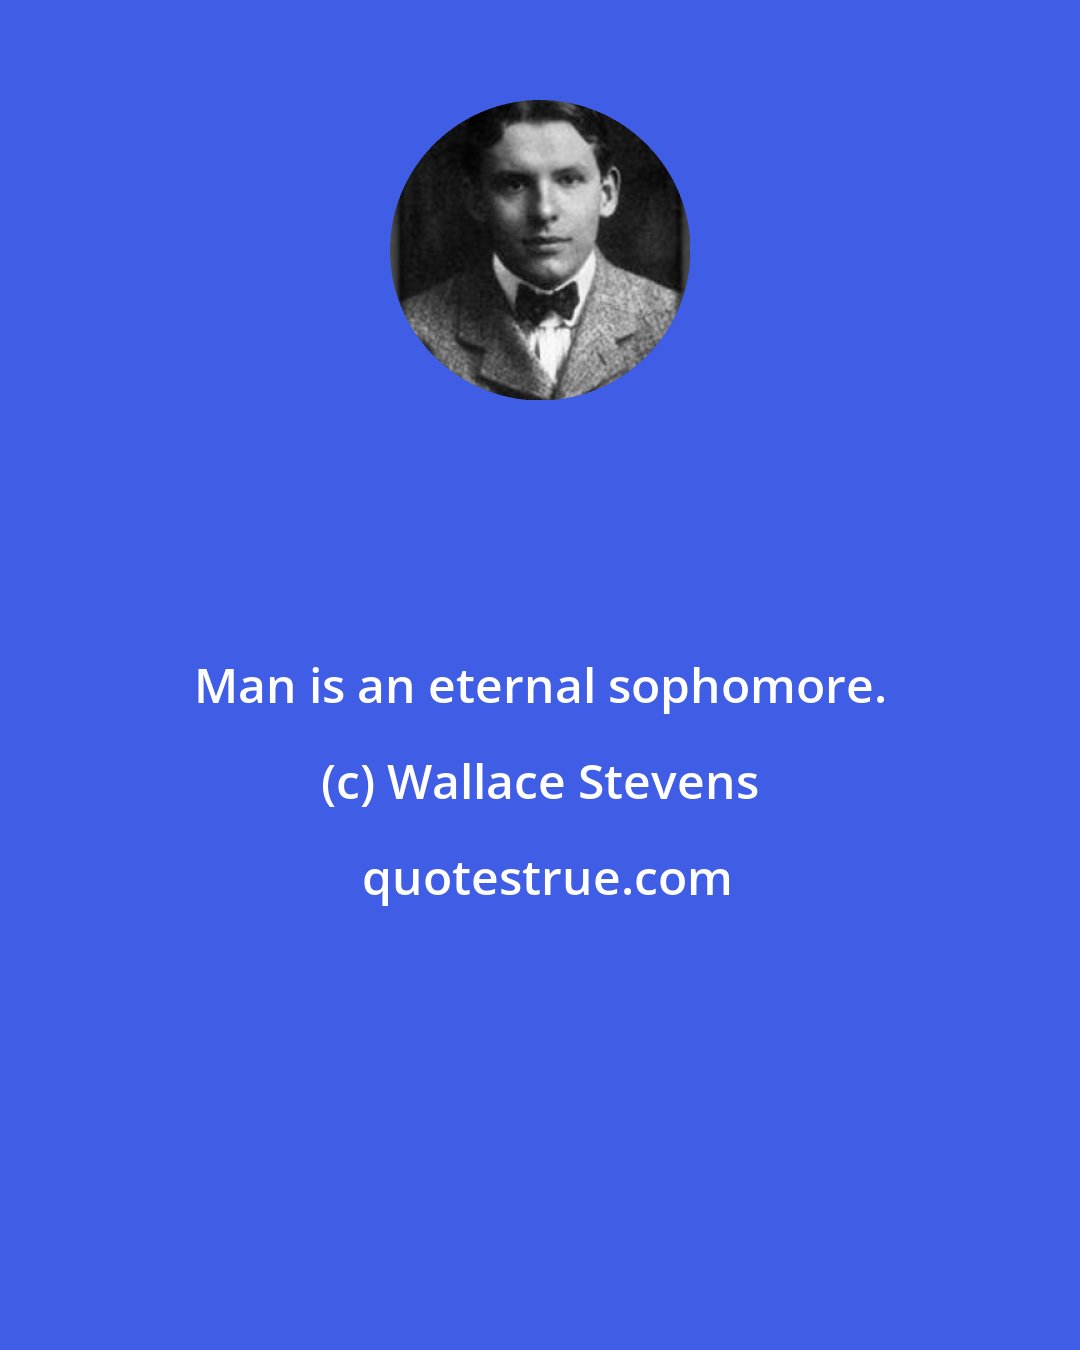 Wallace Stevens: Man is an eternal sophomore.